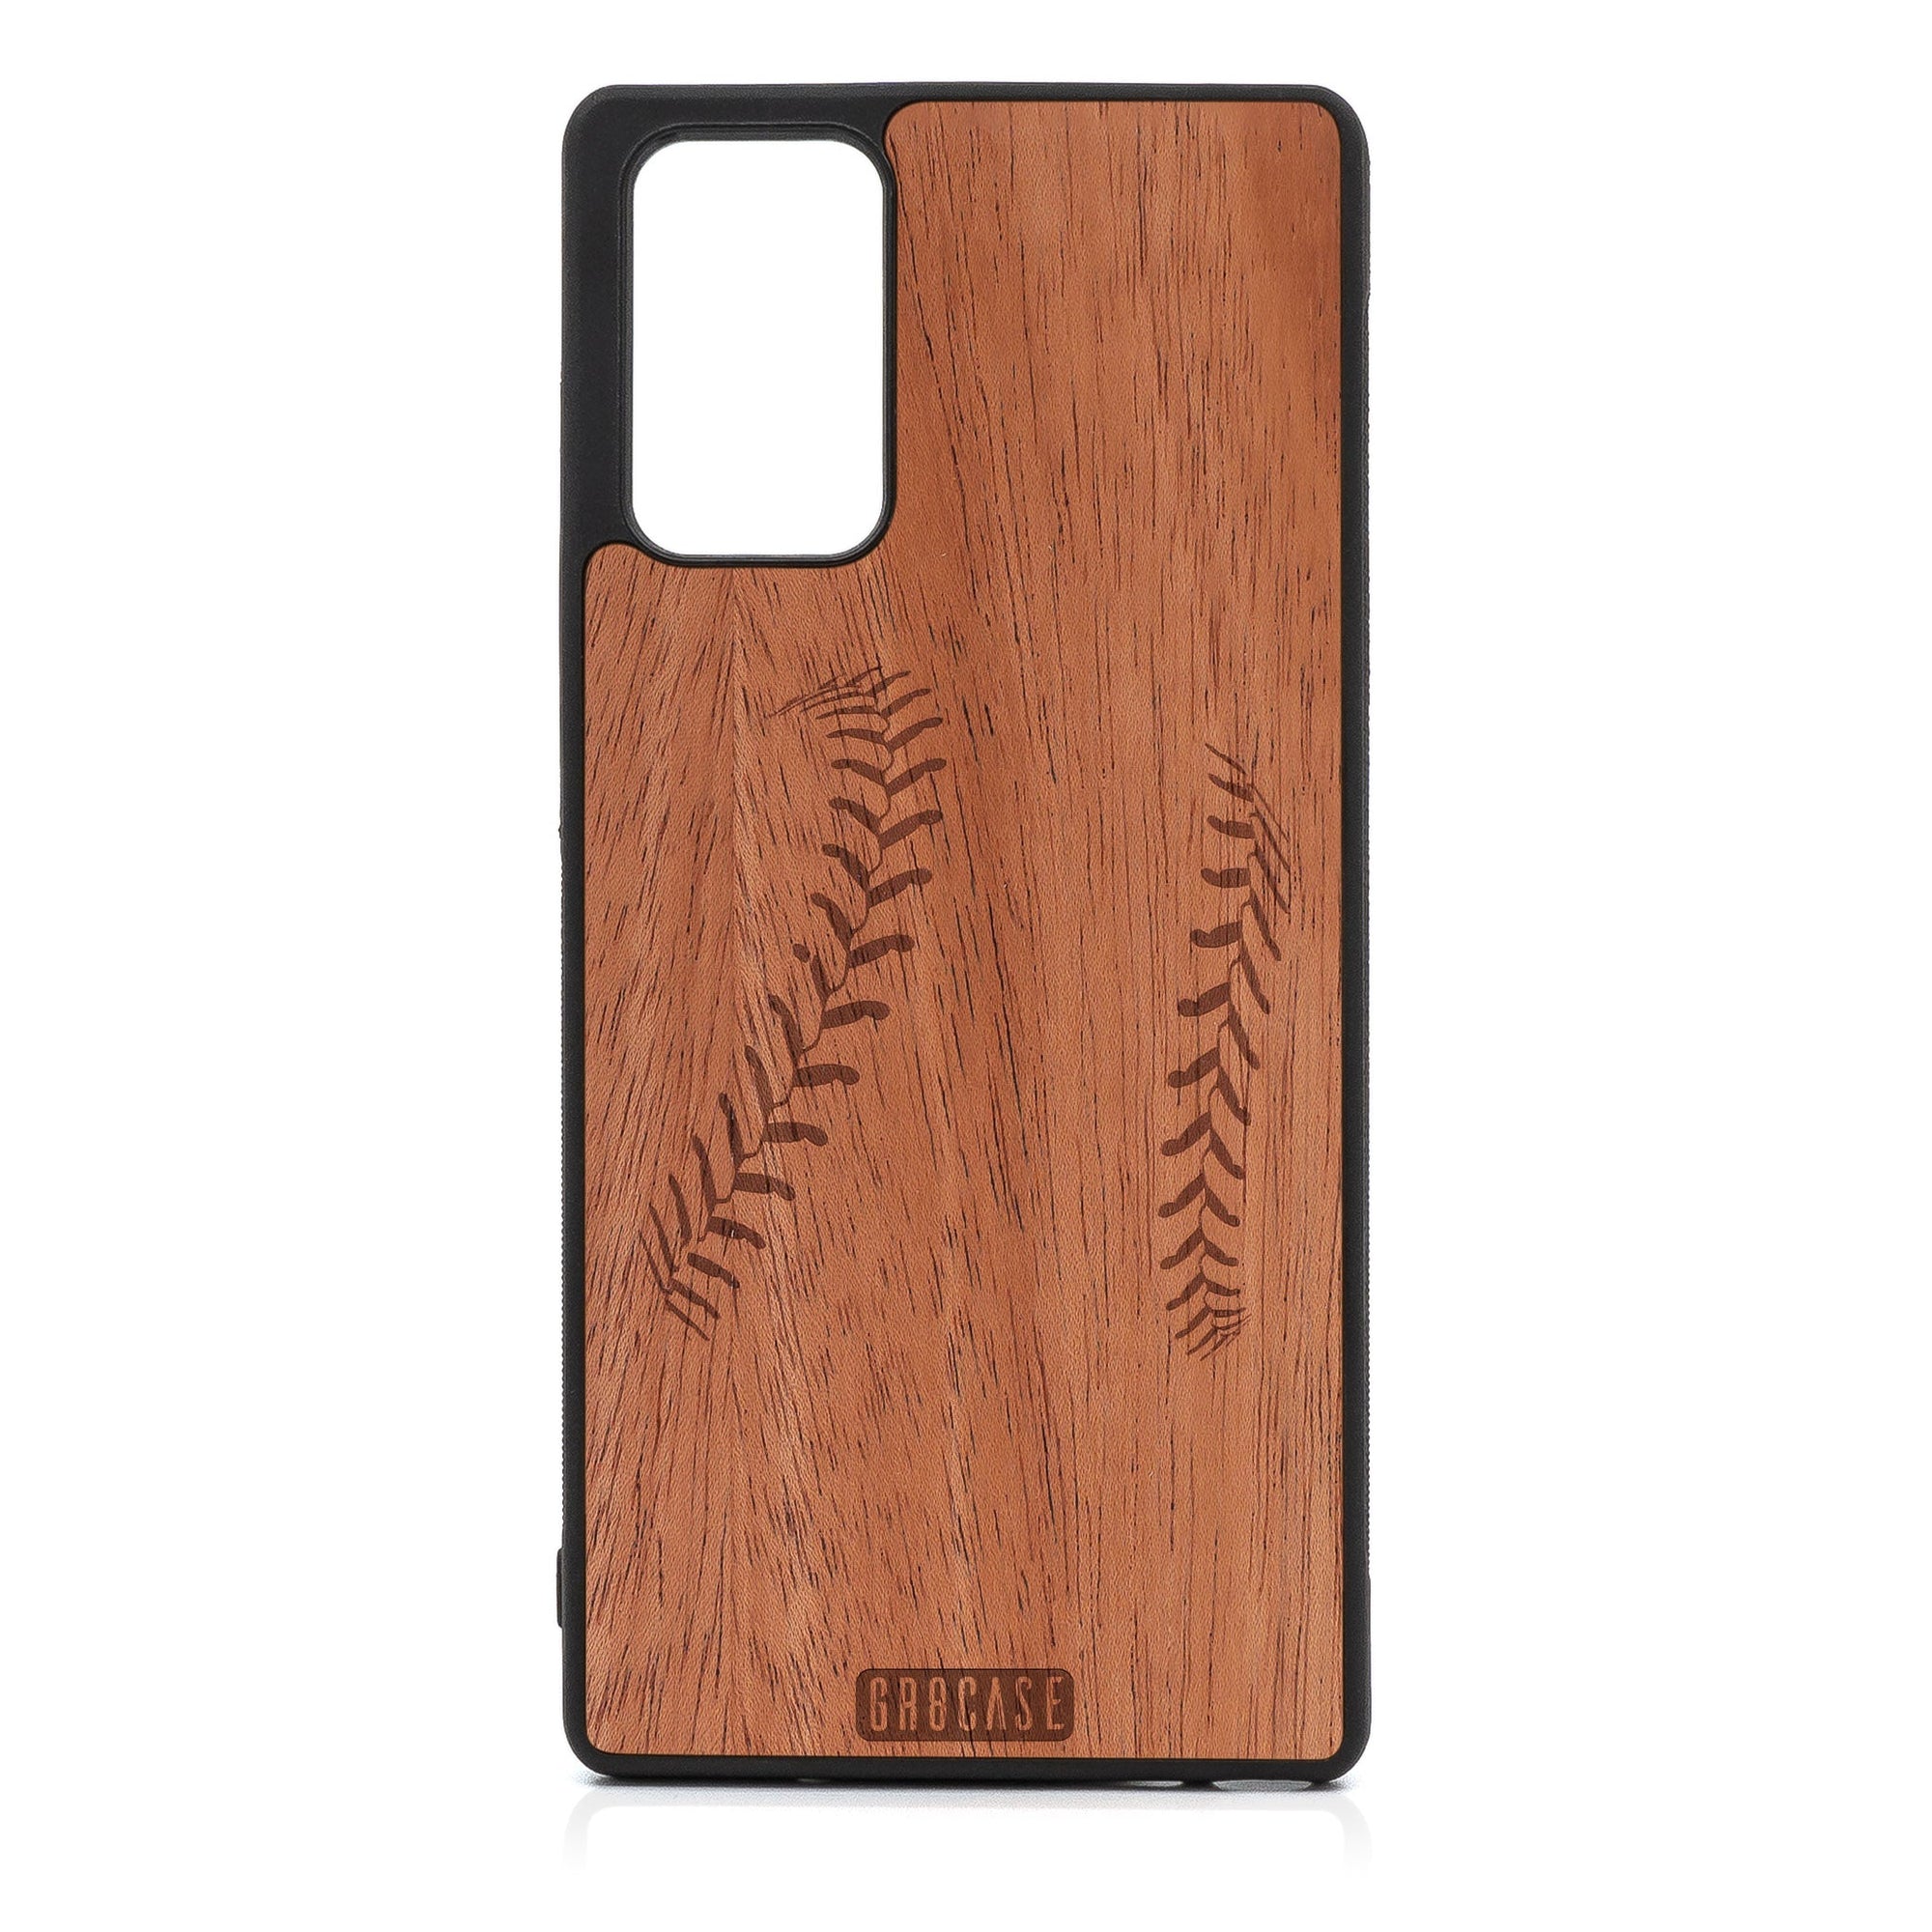 Baseball Stitches Design Wood Case For Samsung Galaxy A52 5G